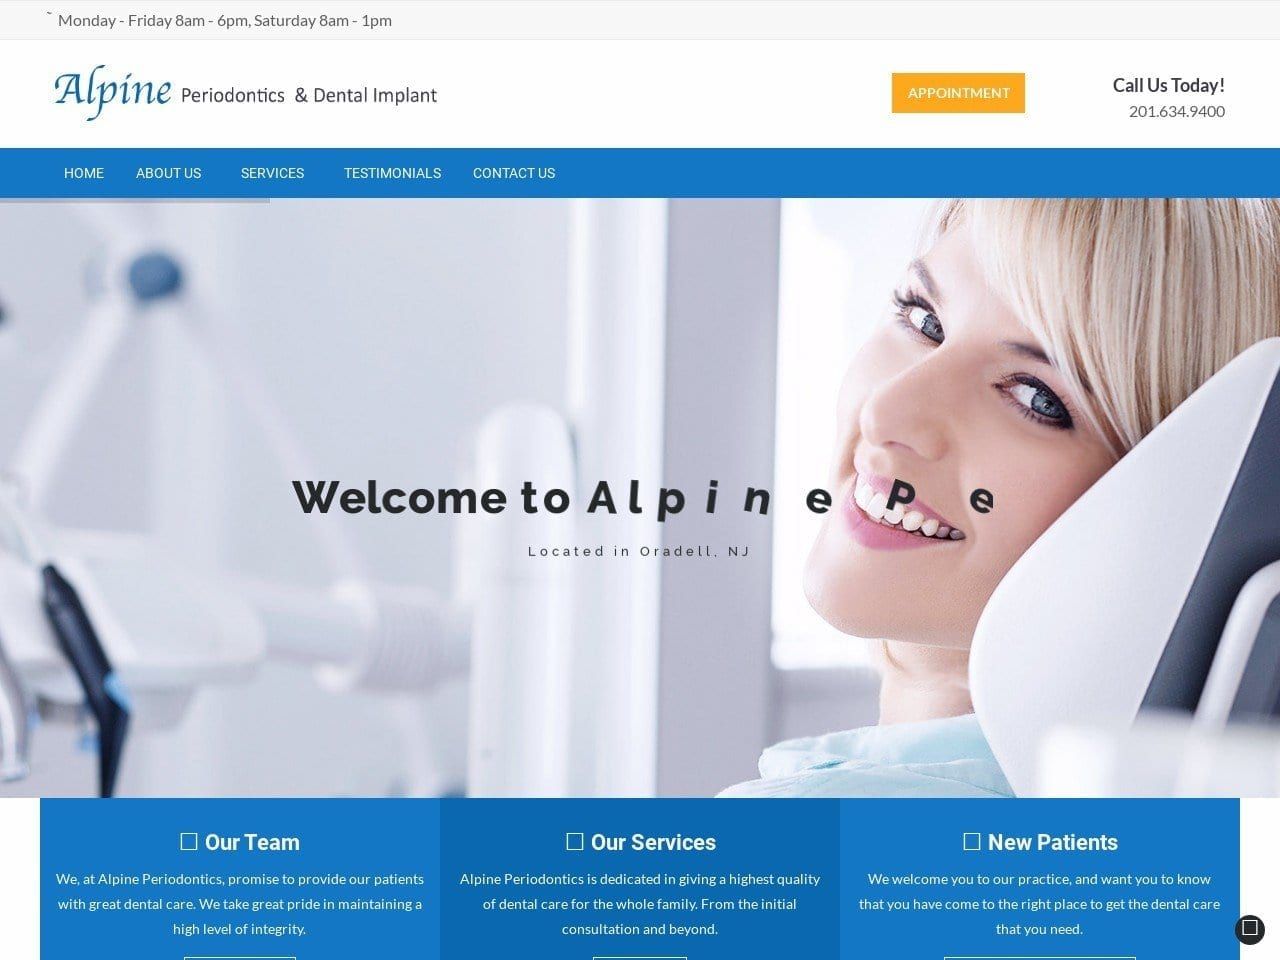 Alpine Periodontics & Dental Implants Website Screenshot from alpineperio.com